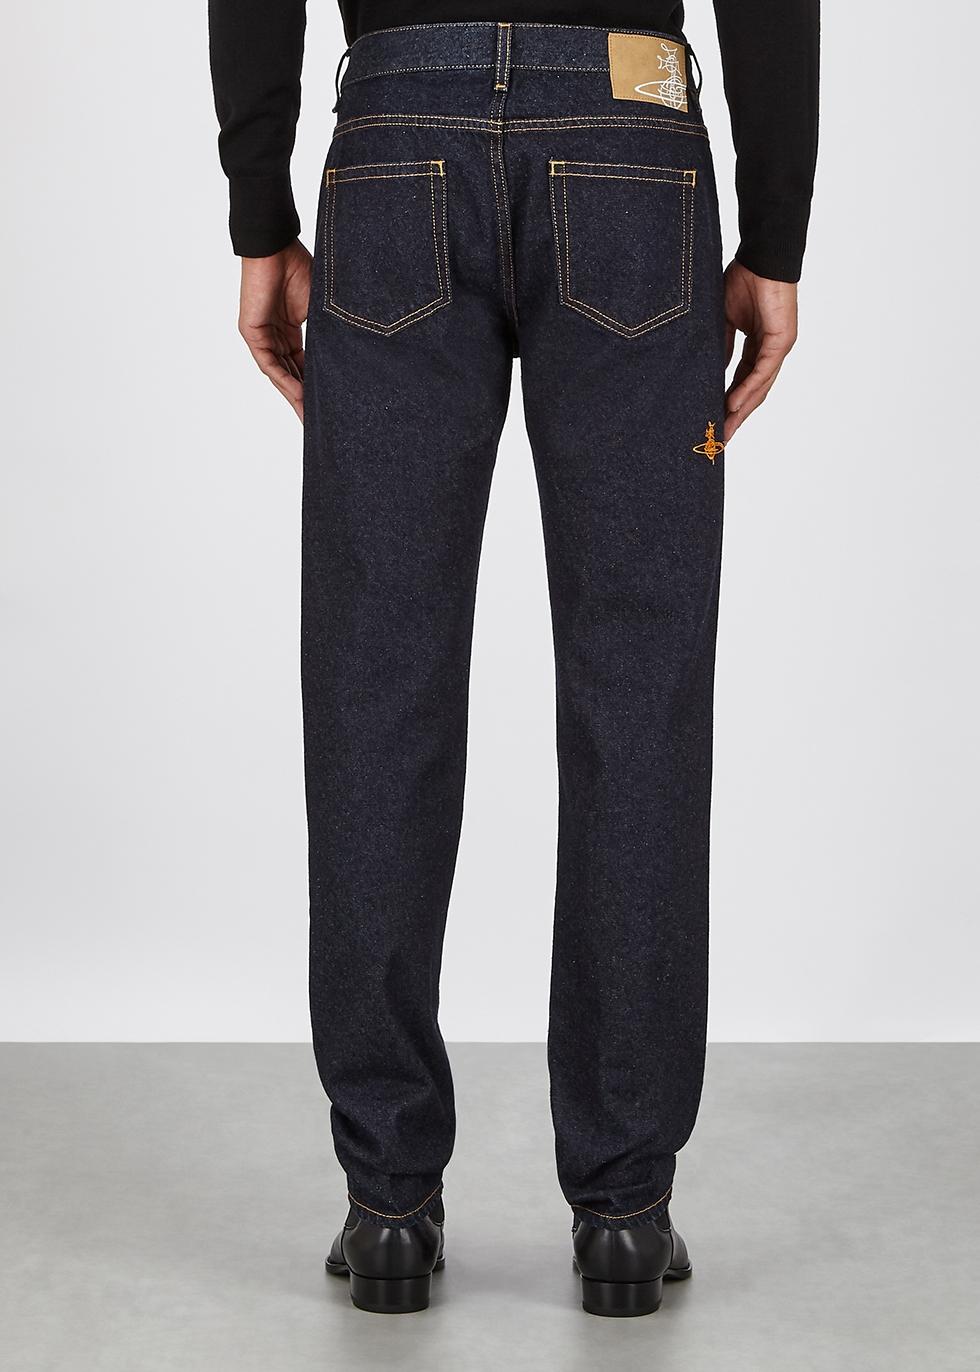 Vivienne Westwood Denim Dark Blue Tapered Jeans for Men - Lyst